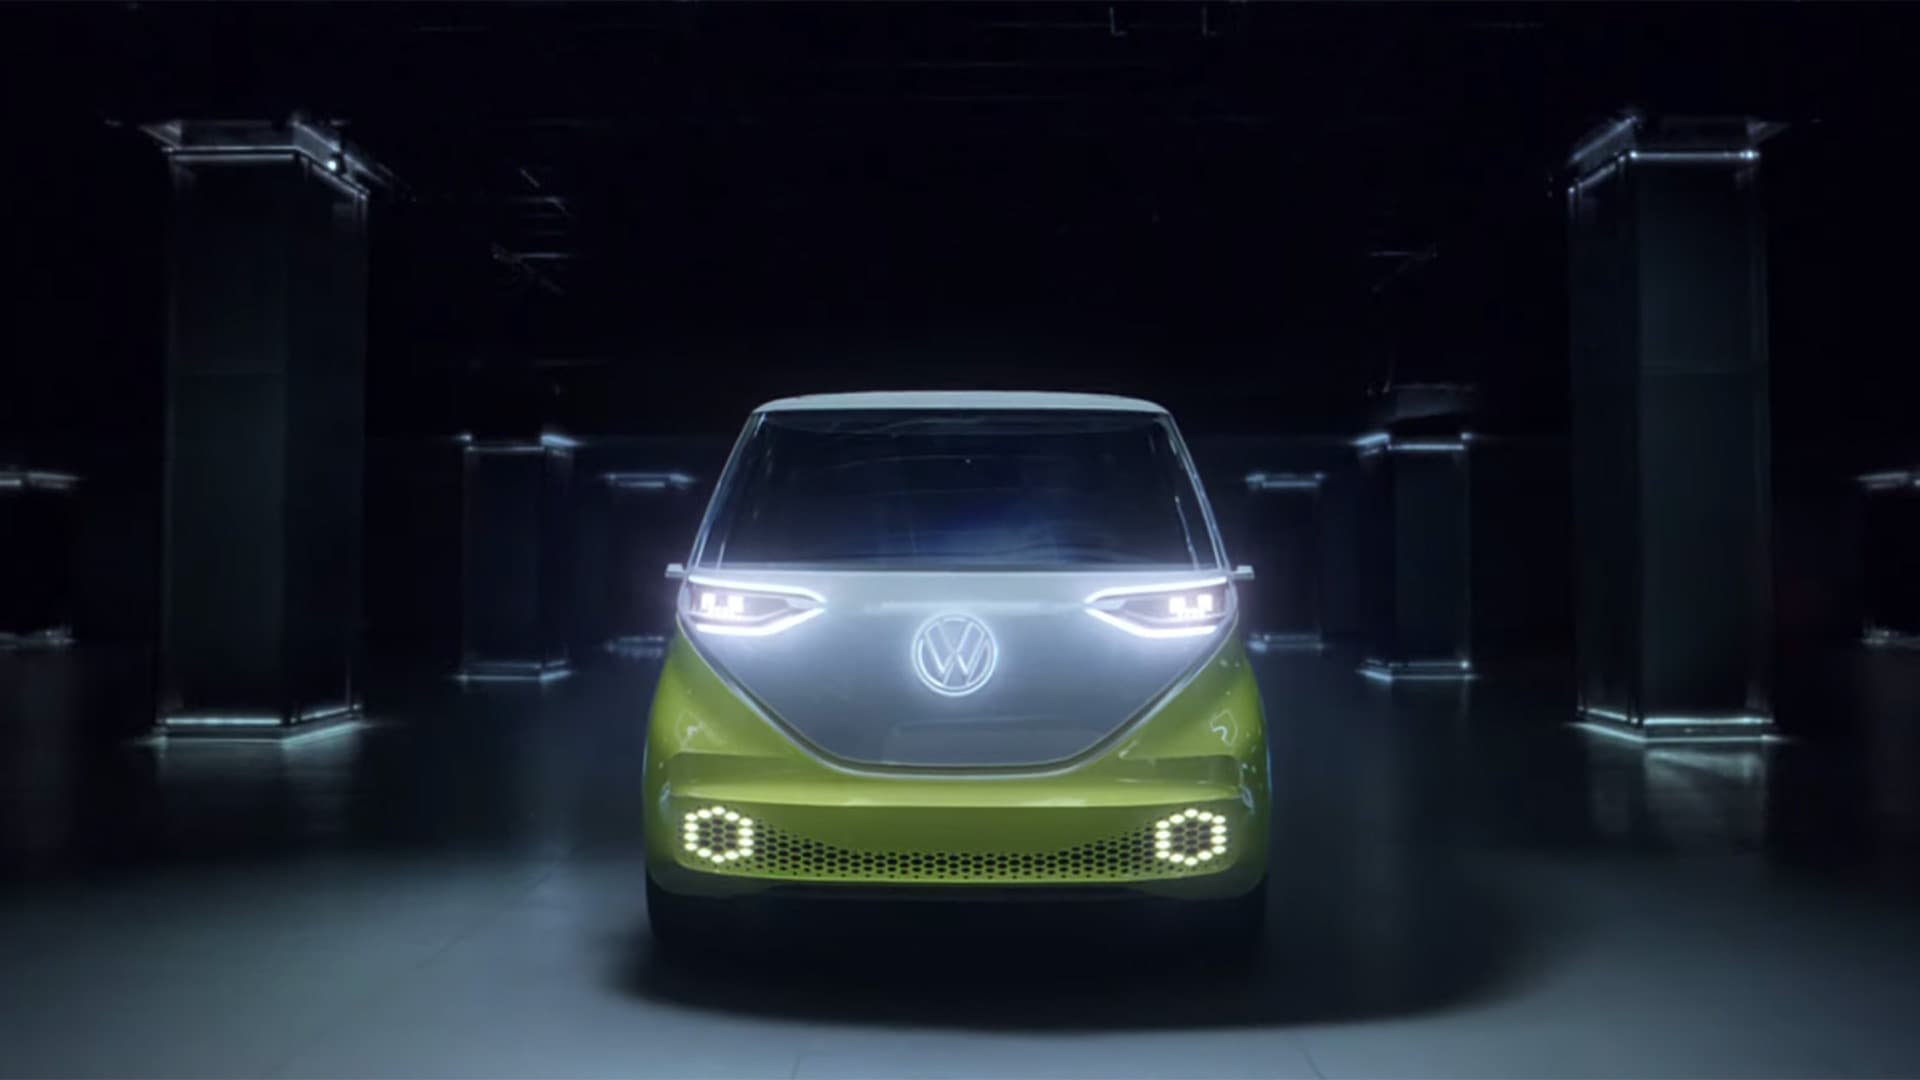 Screengrab from Volkswagen's "Hello Light" ad